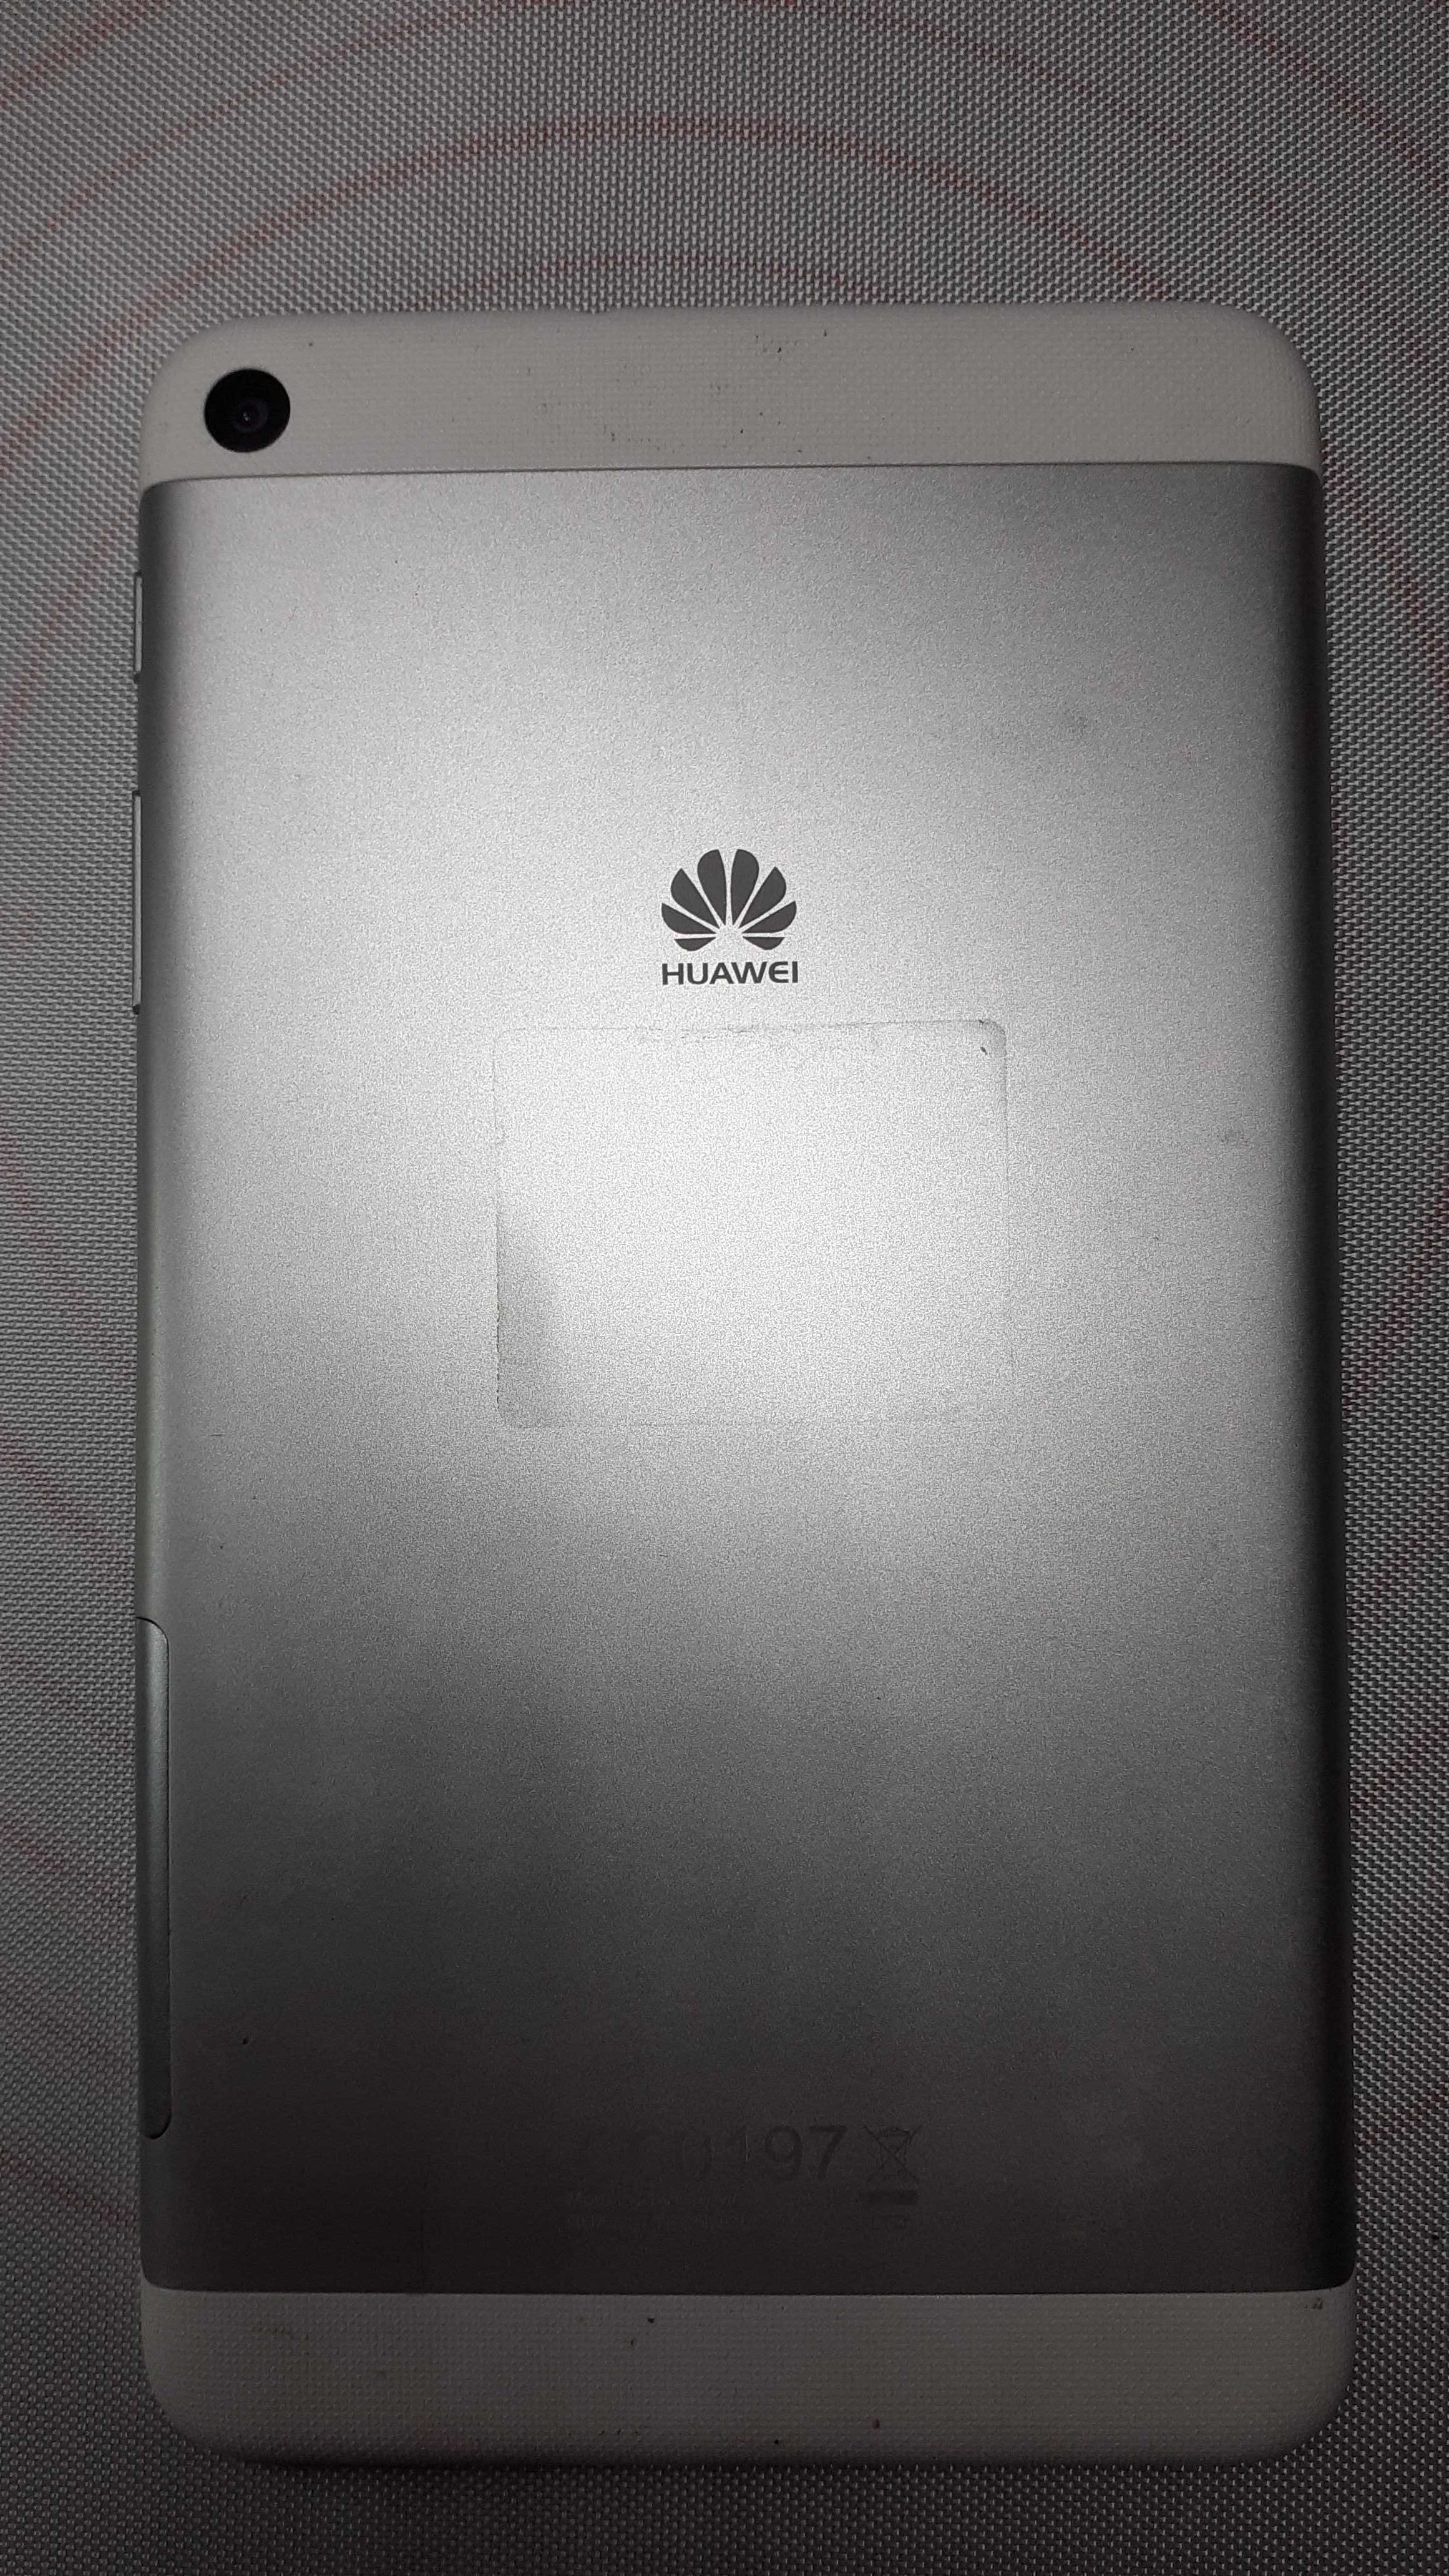 Huawei T1-701u MediaPad T1 7.0 8GB 3G комплектующие